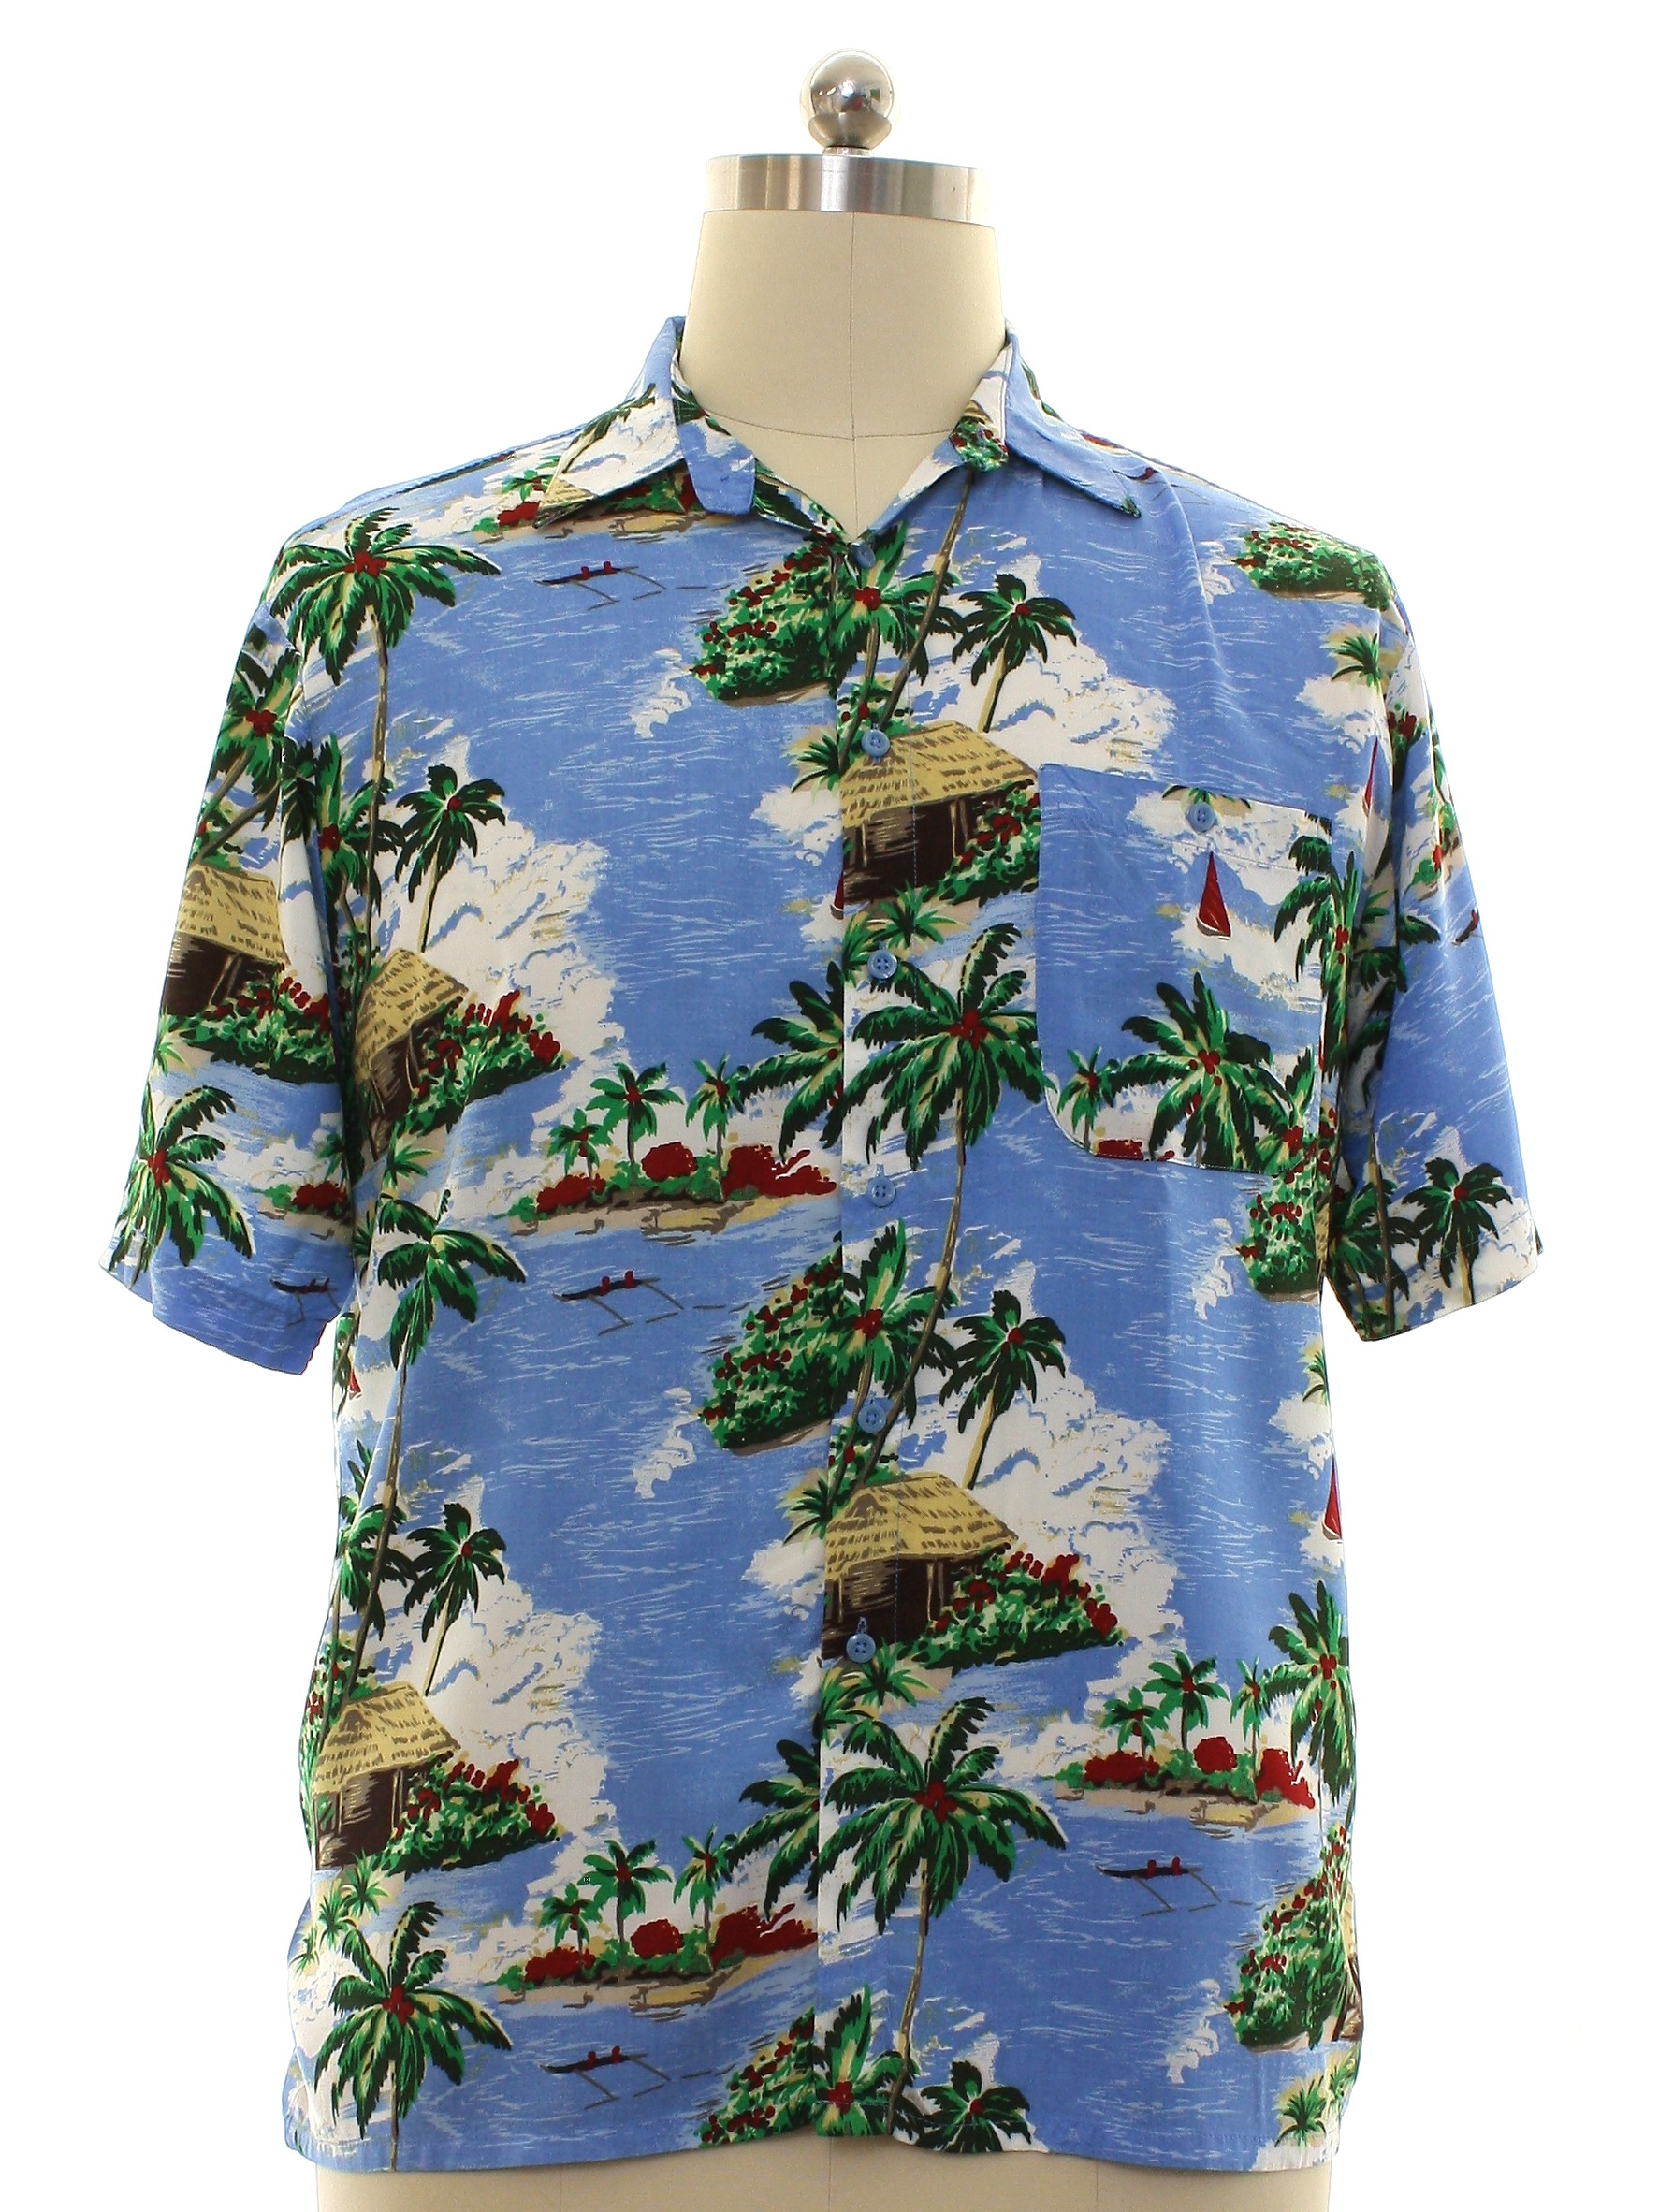 Retro 1980's Hawaiian Shirt (Puritan) : 80s -Puritan- Mens pale blue ...